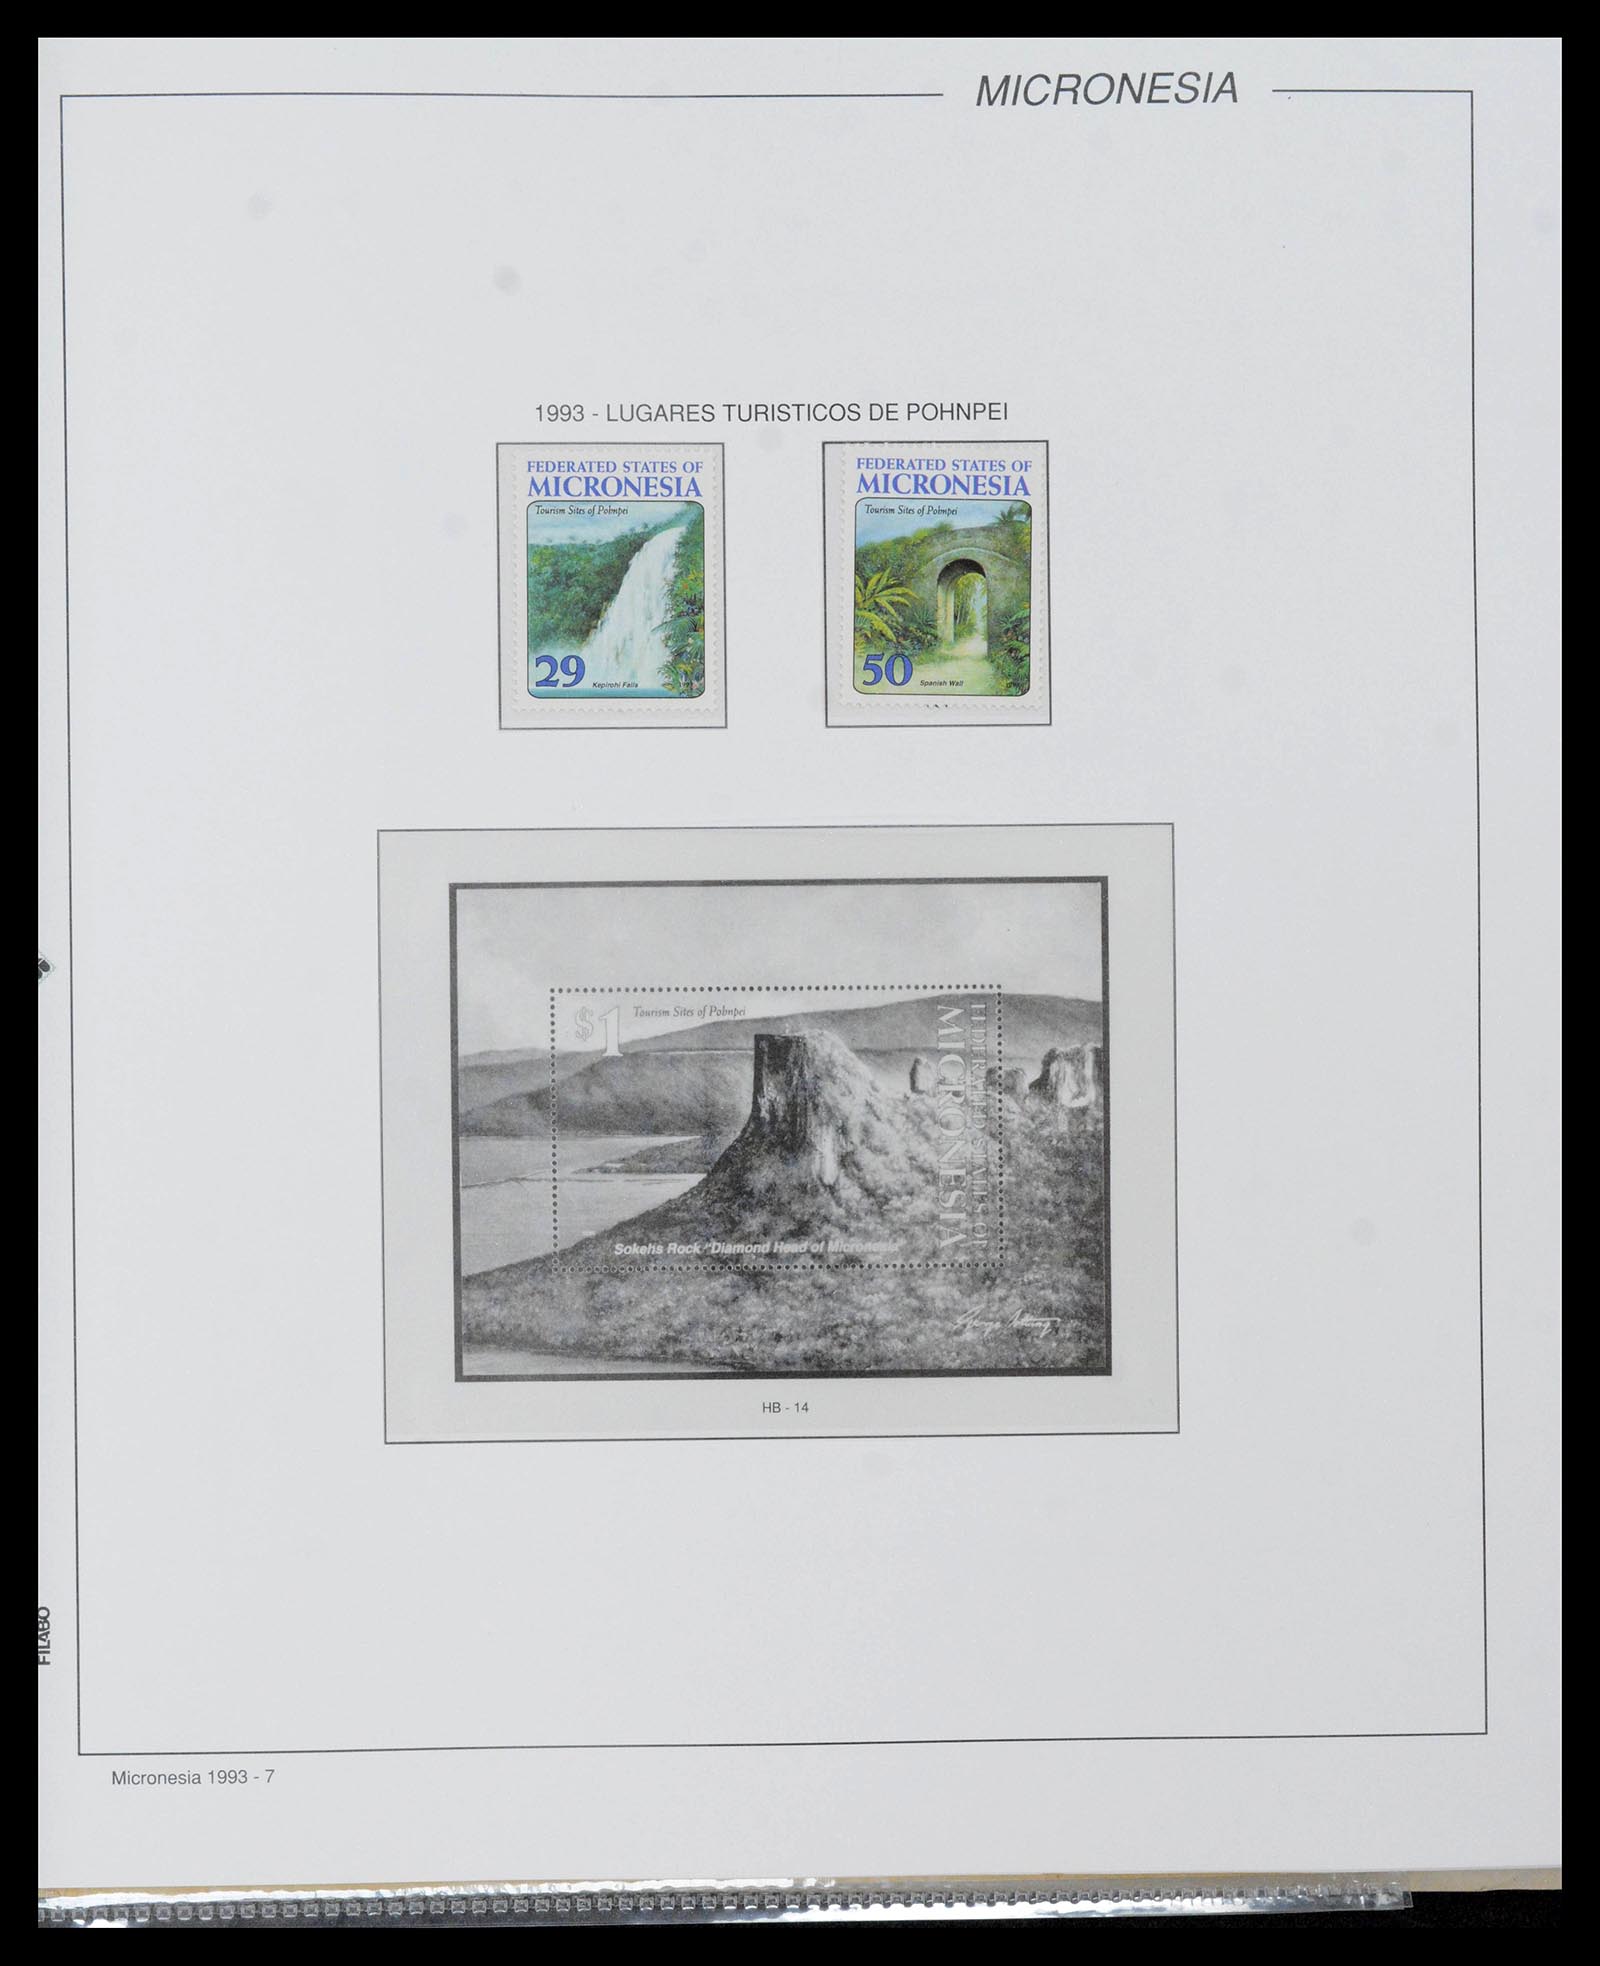 39222 0106 - Stamp collection 39222 Palau, Micronesia and Marshall islands 1980-1995.